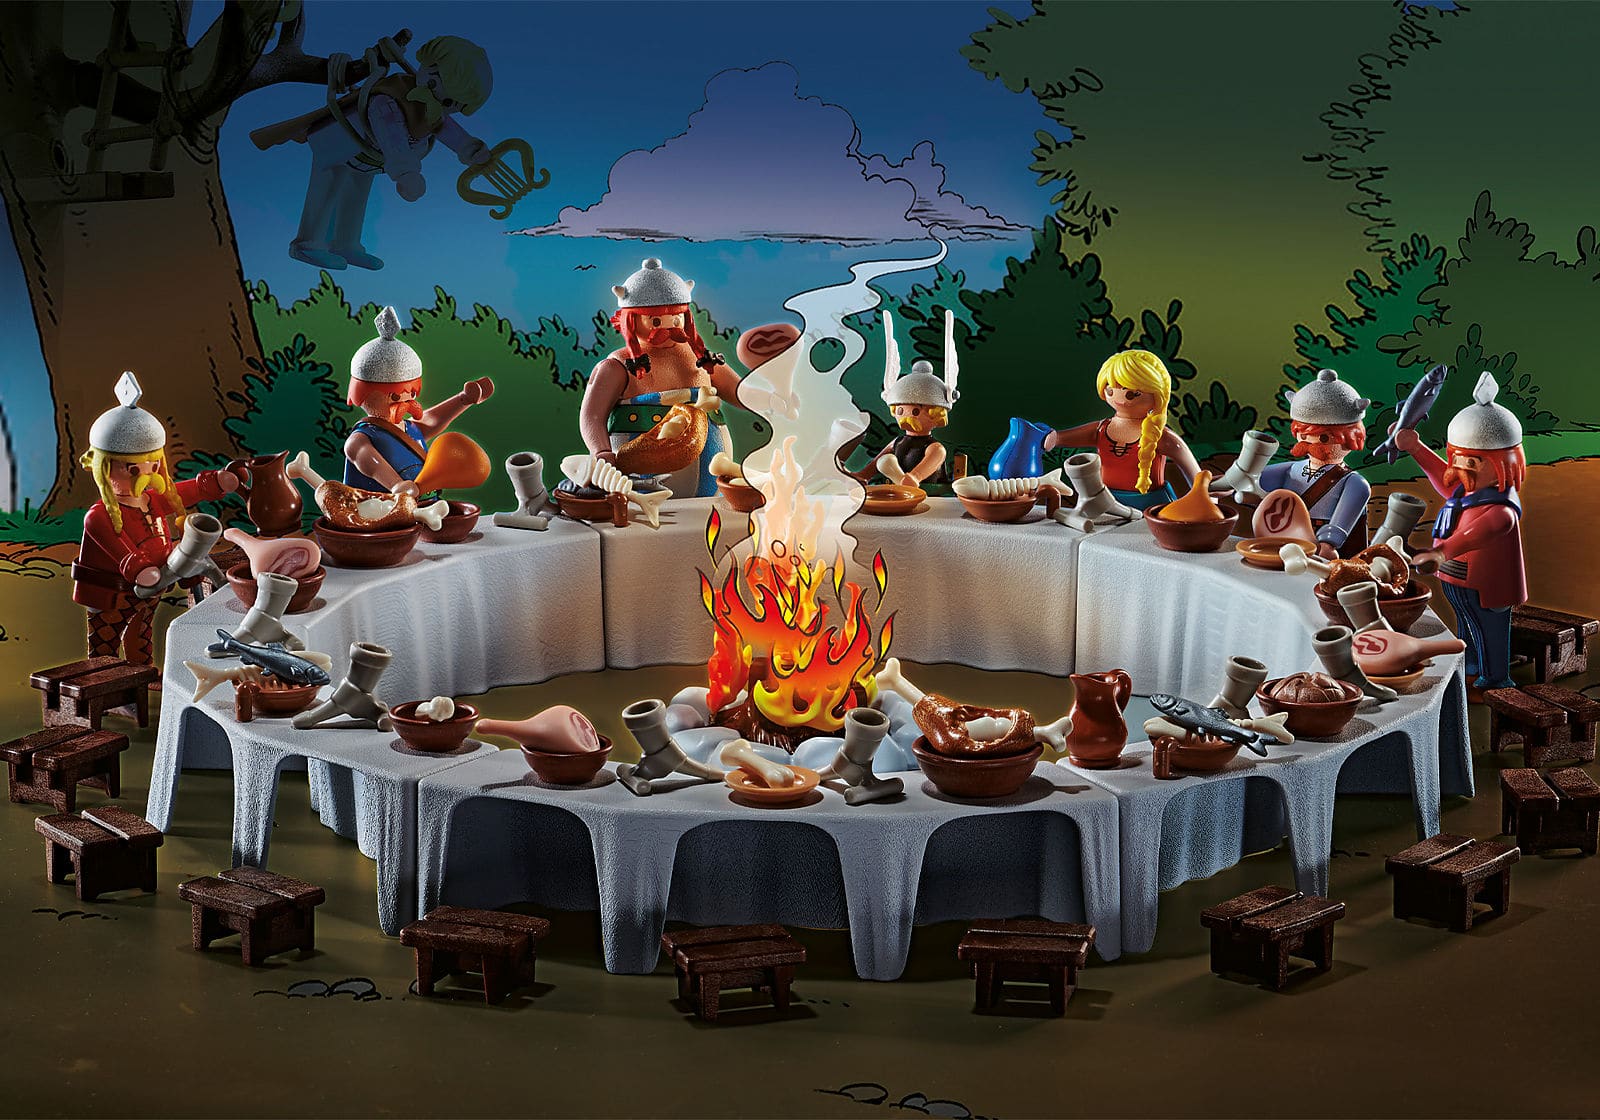 Playmobil Asterix großes Dorffest: Das große Festessen.